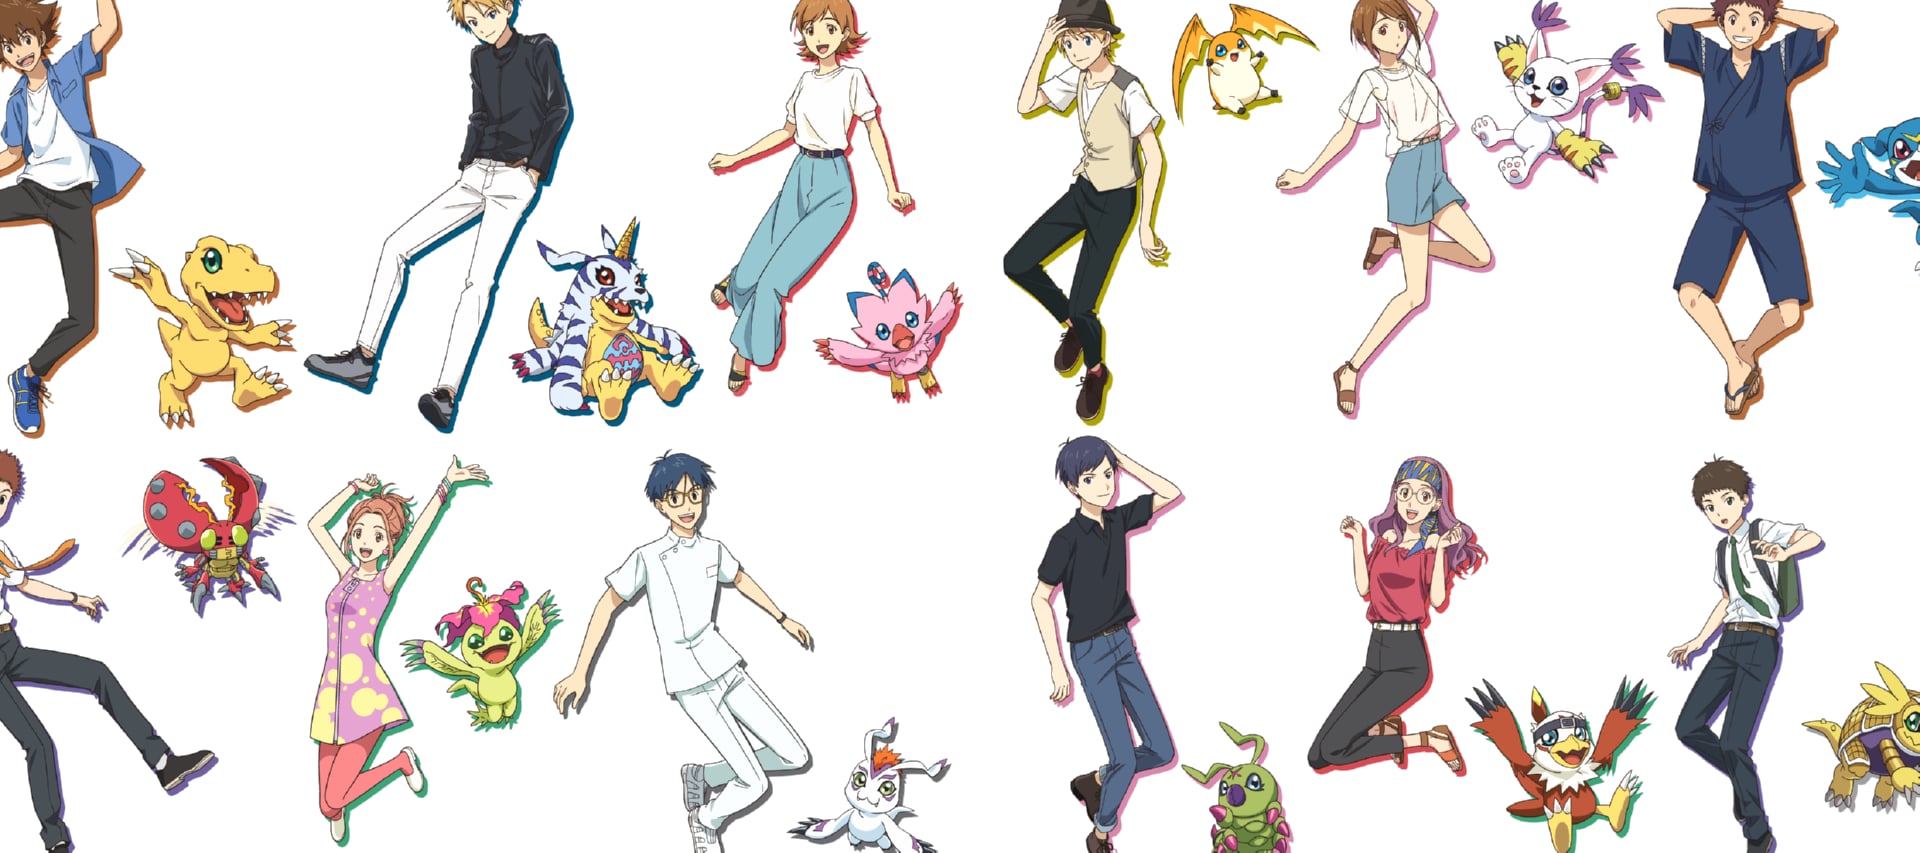 Digimon Adventure Last Evolution Kizuna at 640 x 960 iPhone 4 size wallpapers HD quality